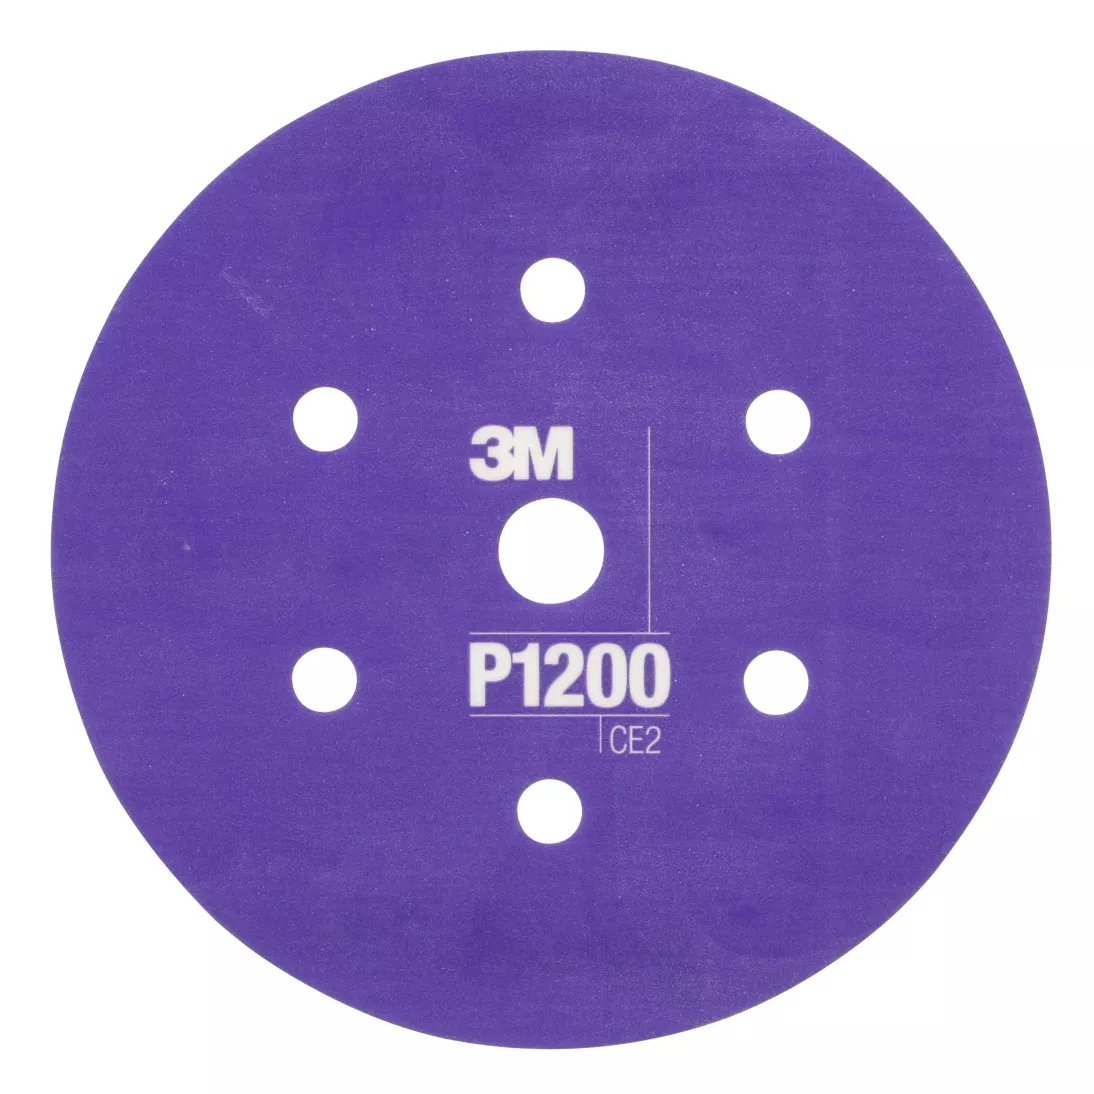 3M™ Hookit™ Flexible Abrasive Disc 270J, 34408, 6 in, Dust Free, P1200,
25 disc per carton, 5 cartons per case